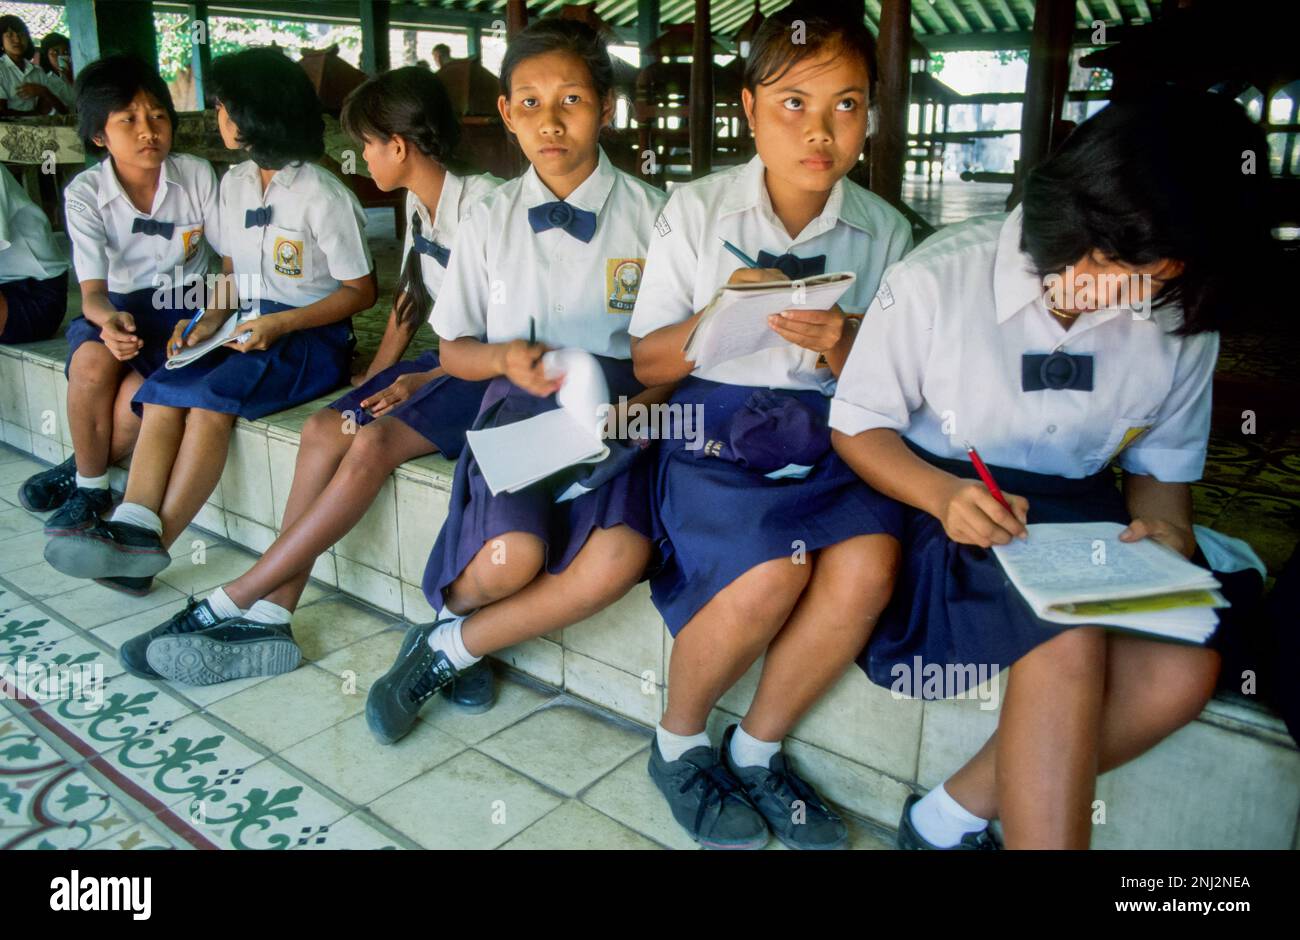 Indonesia, Yogjakarta. Schoolgirls in uniform. Stock Photo